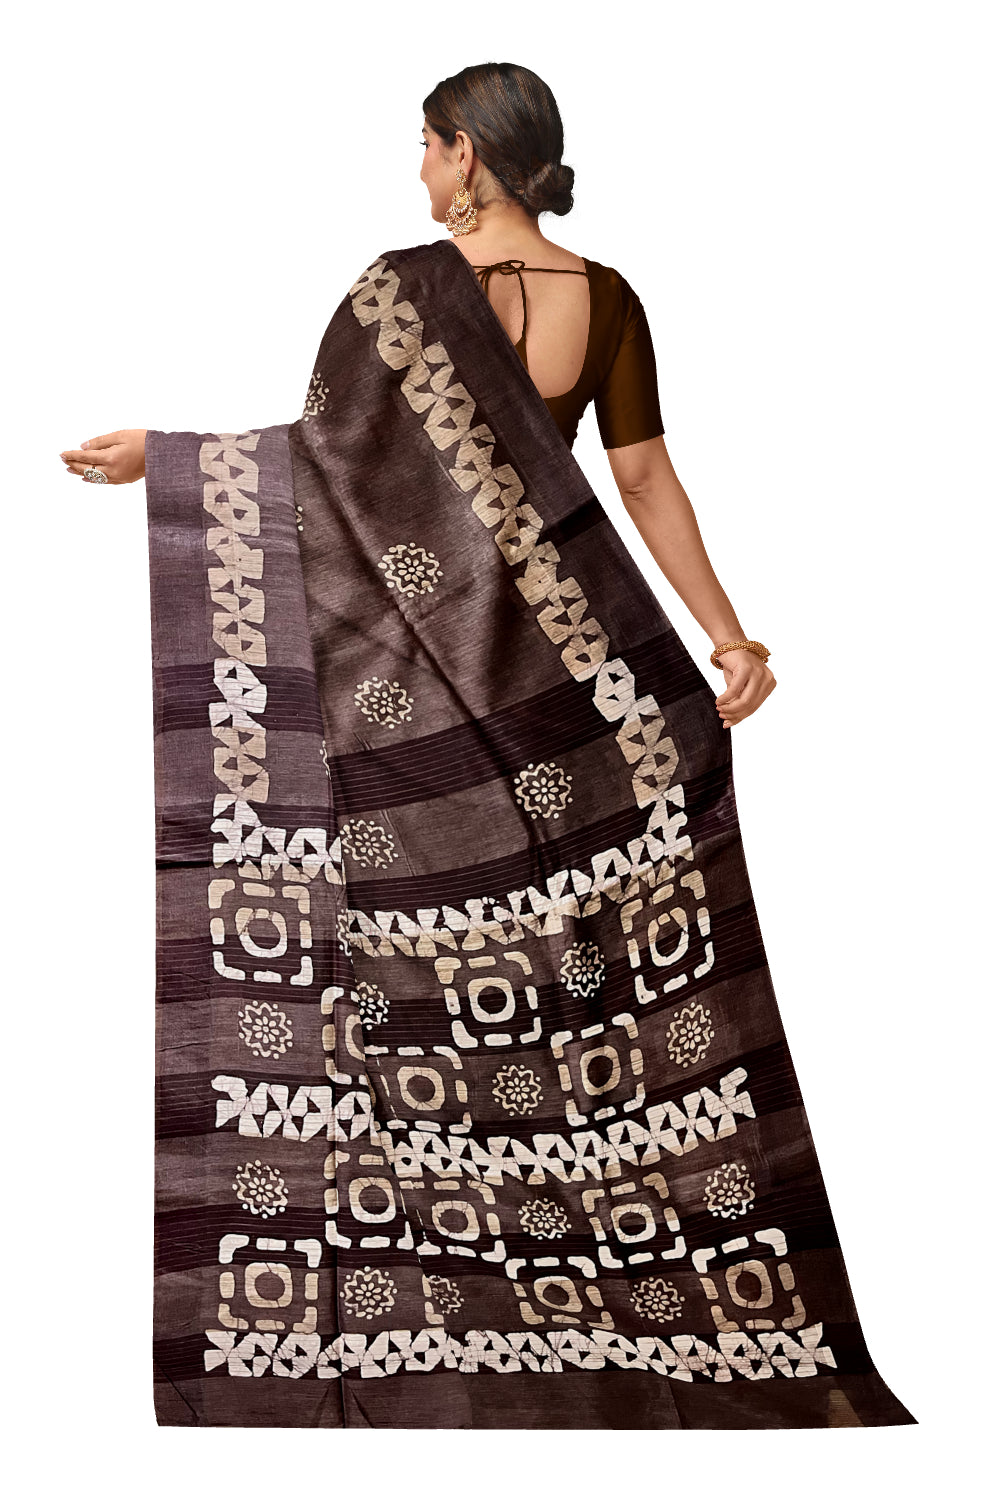 Southloom Cotton Brown Saree with Baswara Prints on Body and Pallu